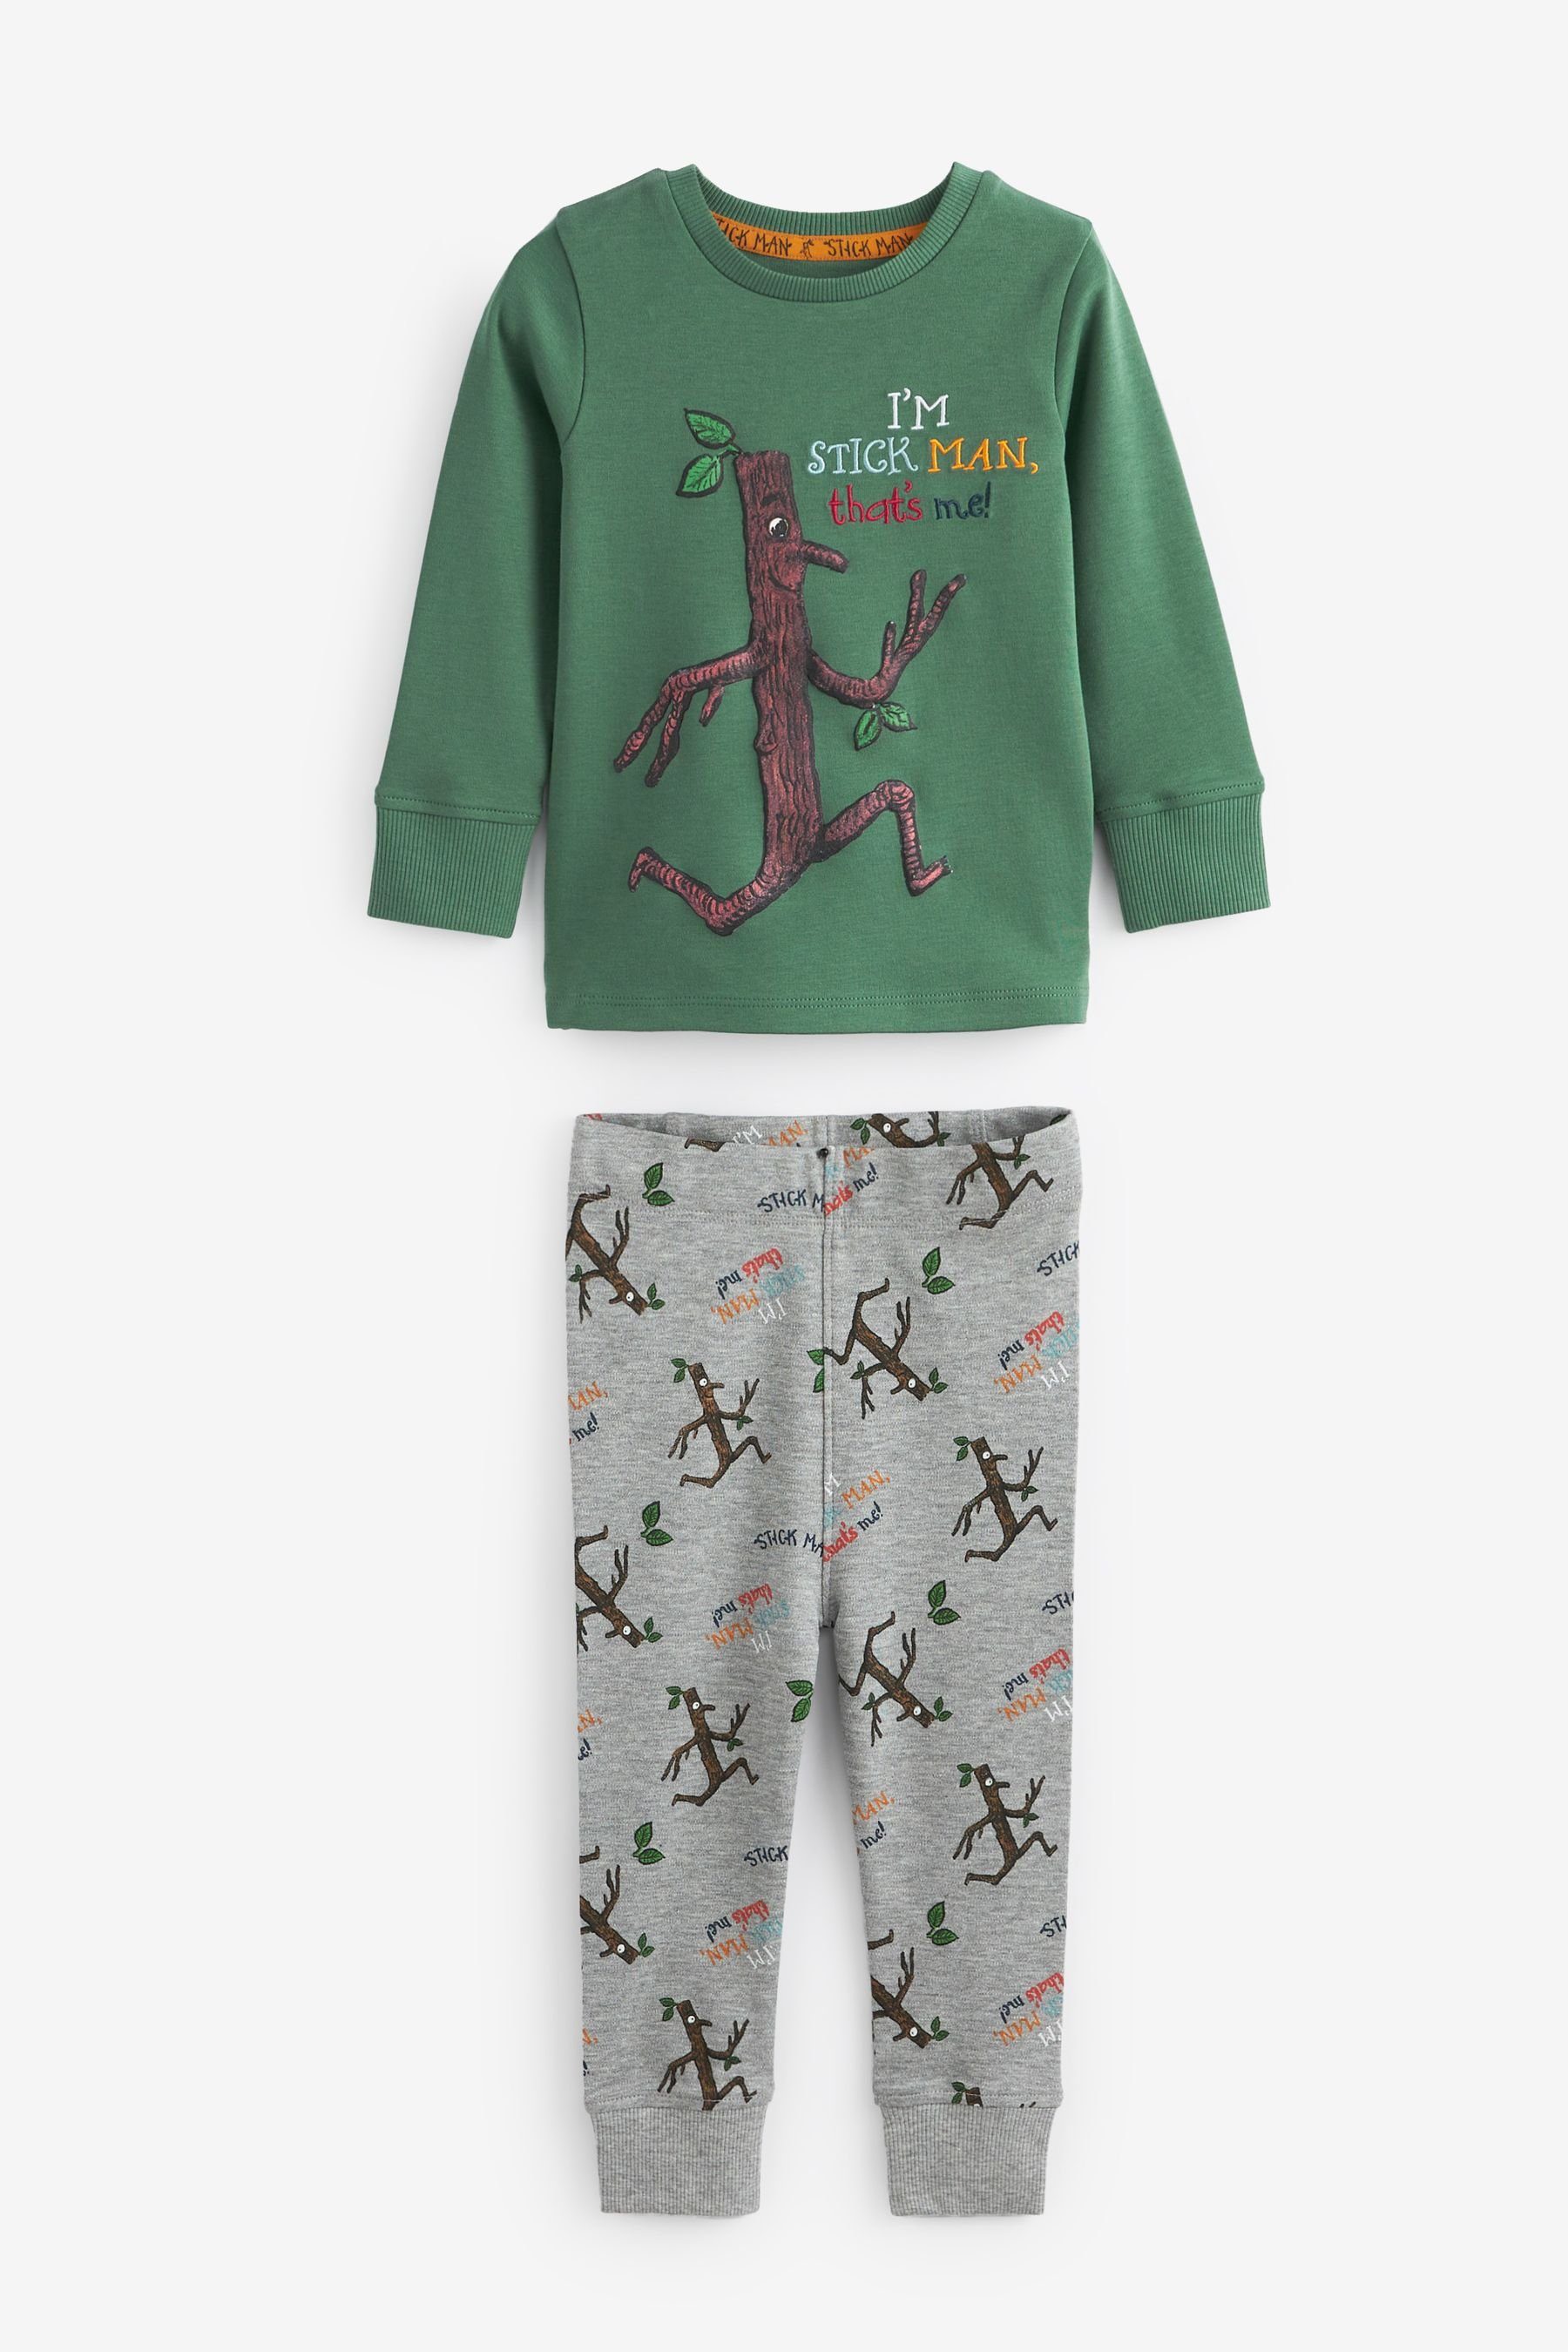 Green Stick Next tlg) (2 Man Pyjama Kuschel-Pyjama